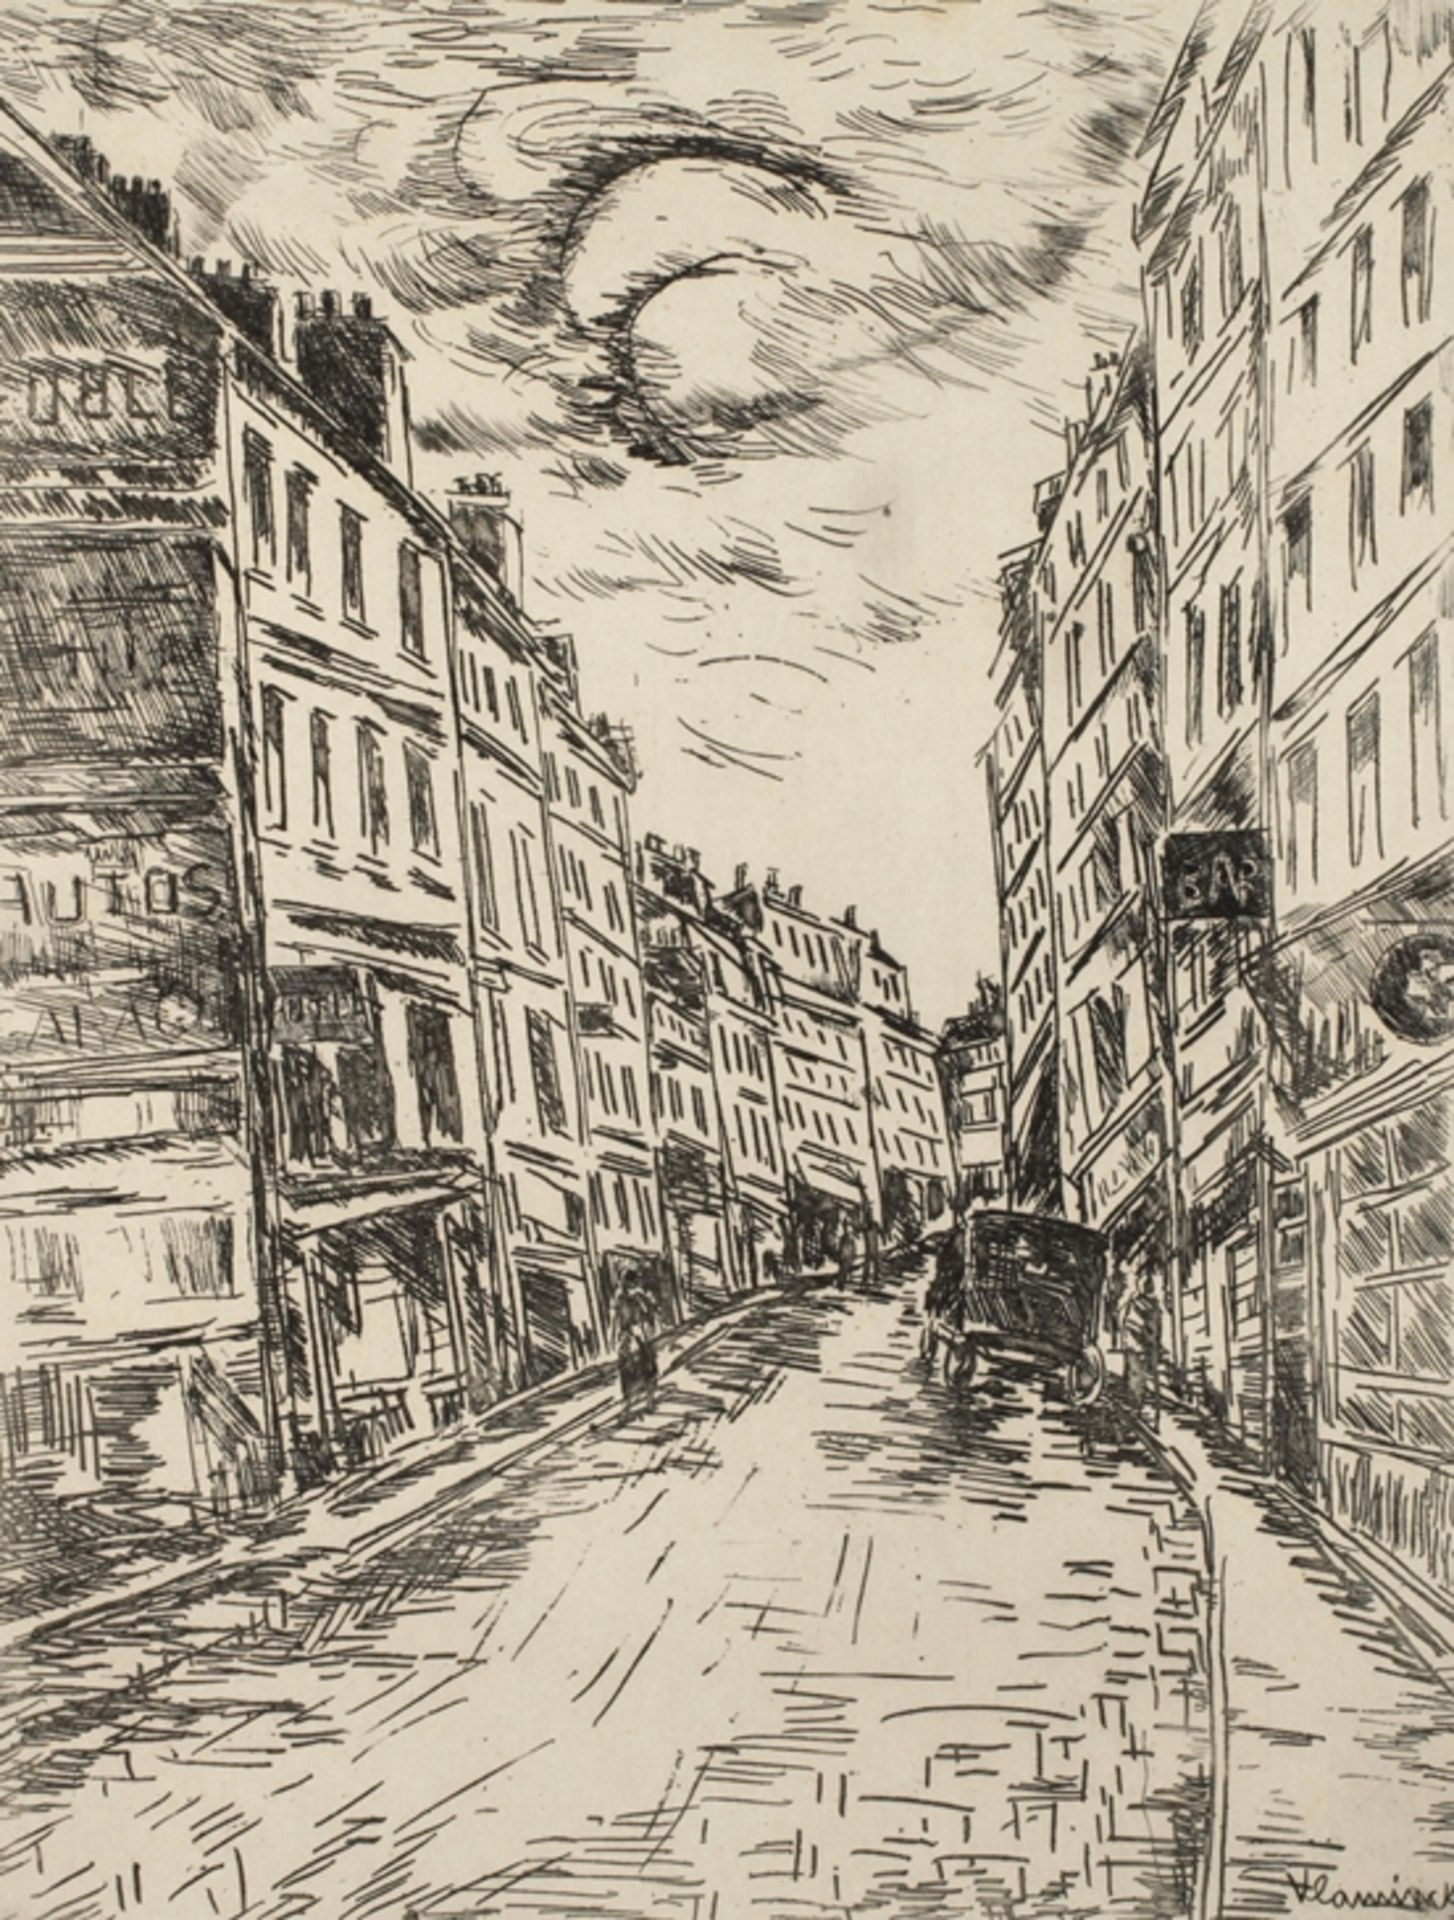 Maurice de Vlaminck, "La Rue de la Glaciére"